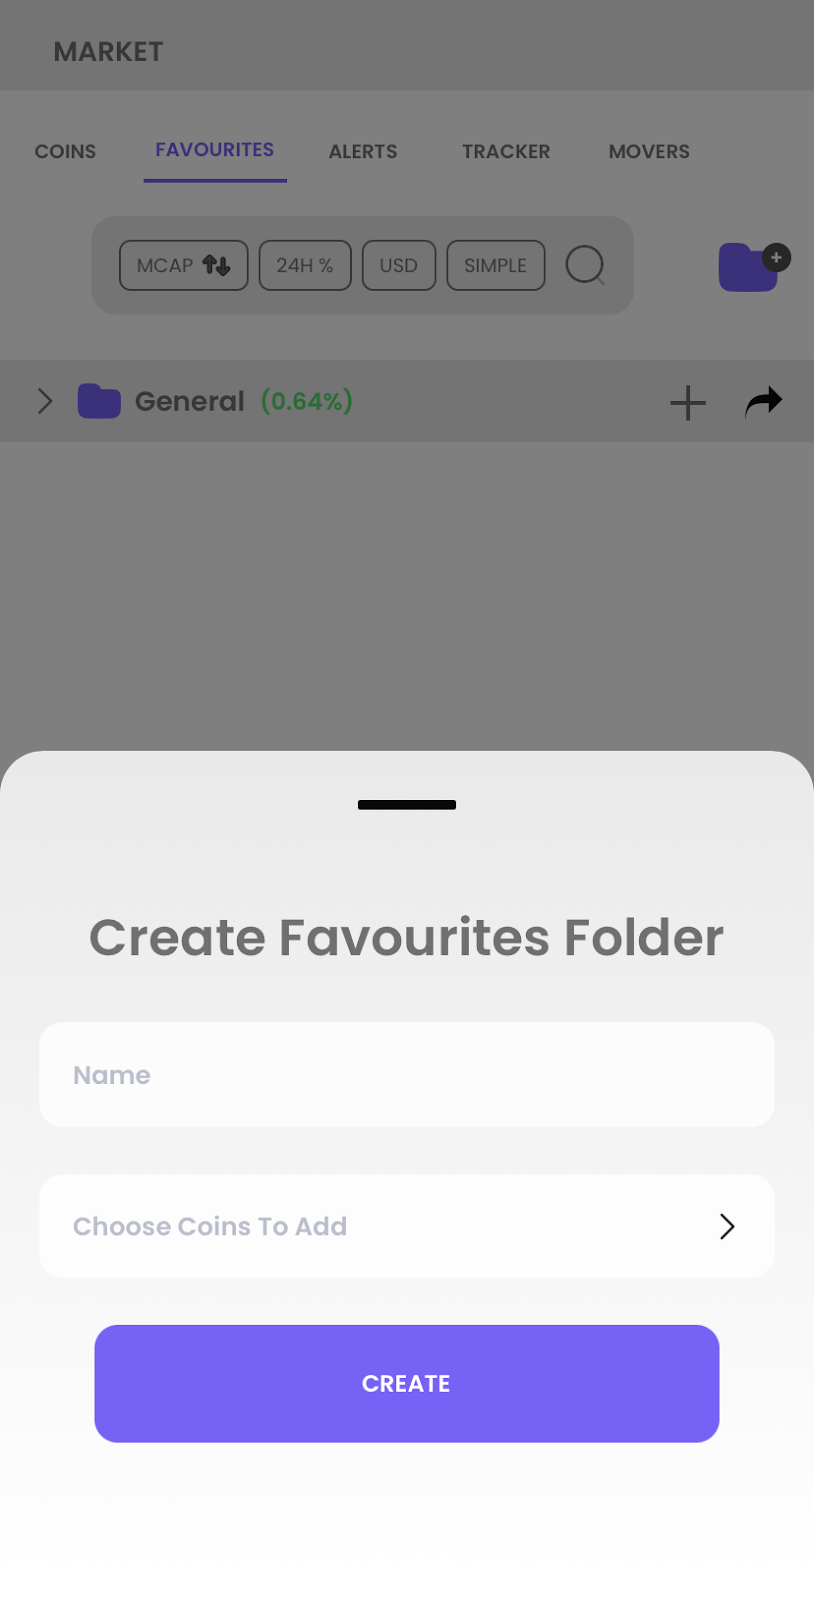 Create a favorite folder